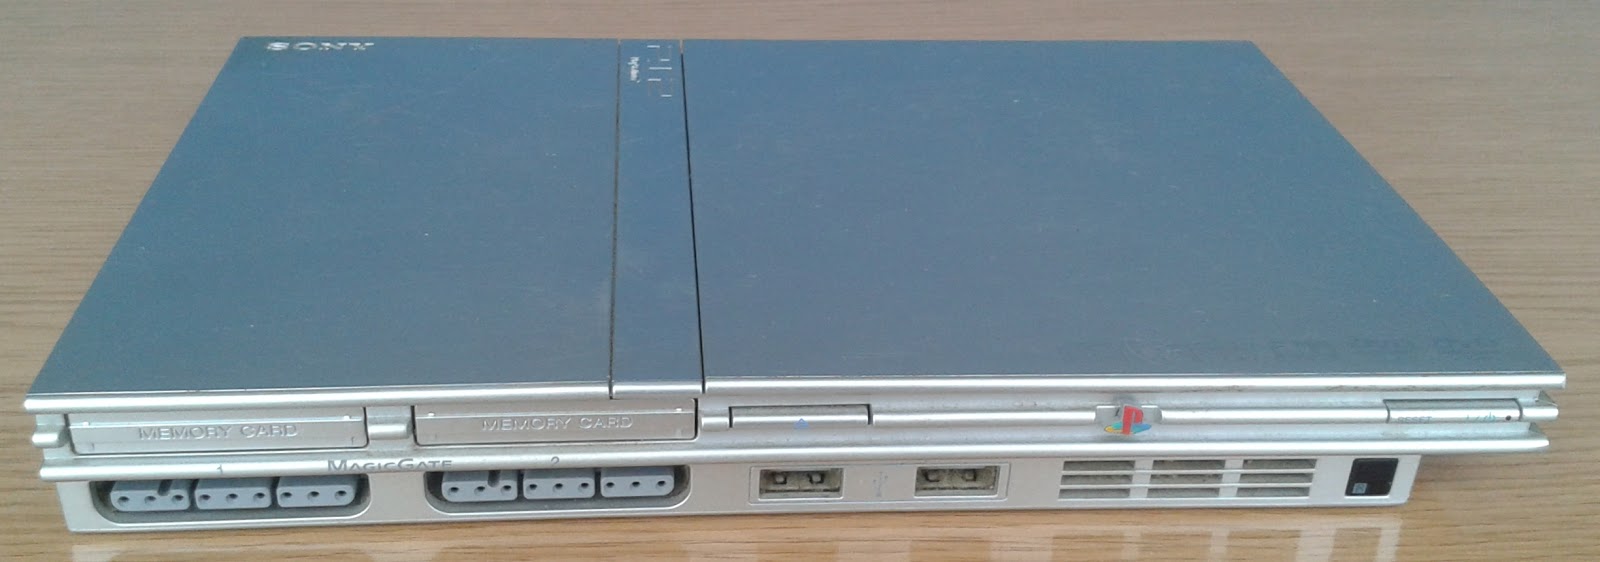 Retro Ordenadores Orty: PlayStation 2 Slim (modelo SCPH 70004) (2004)  (edición limitada plateada.)